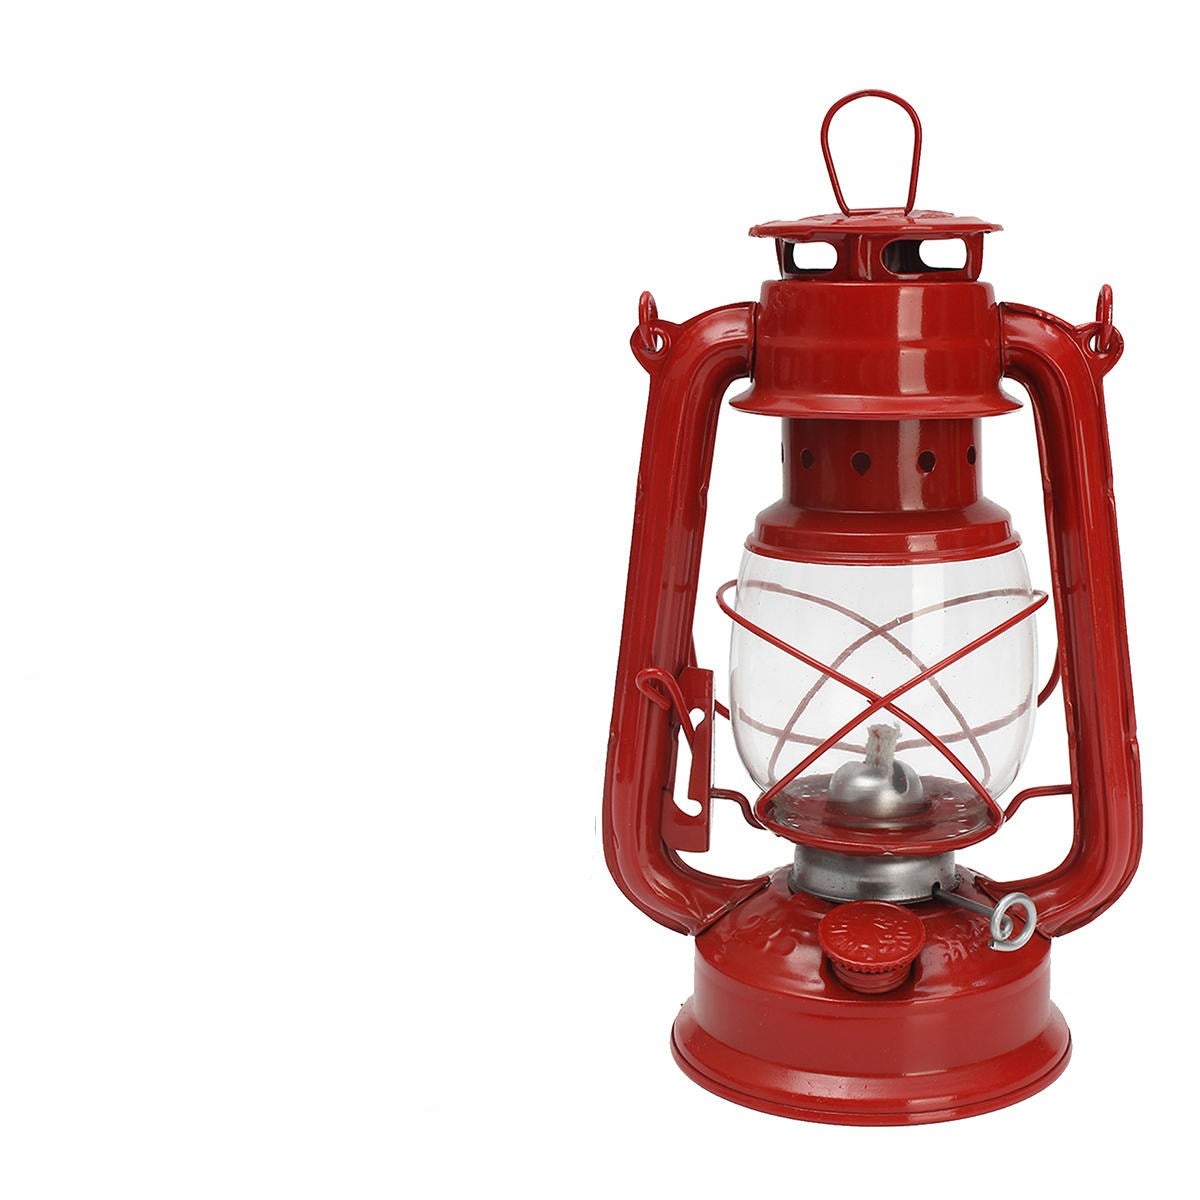 Vintage Oil Lamp Lantern Kerosene Paraffin Hurricane Lamp Light Outdoor Camping